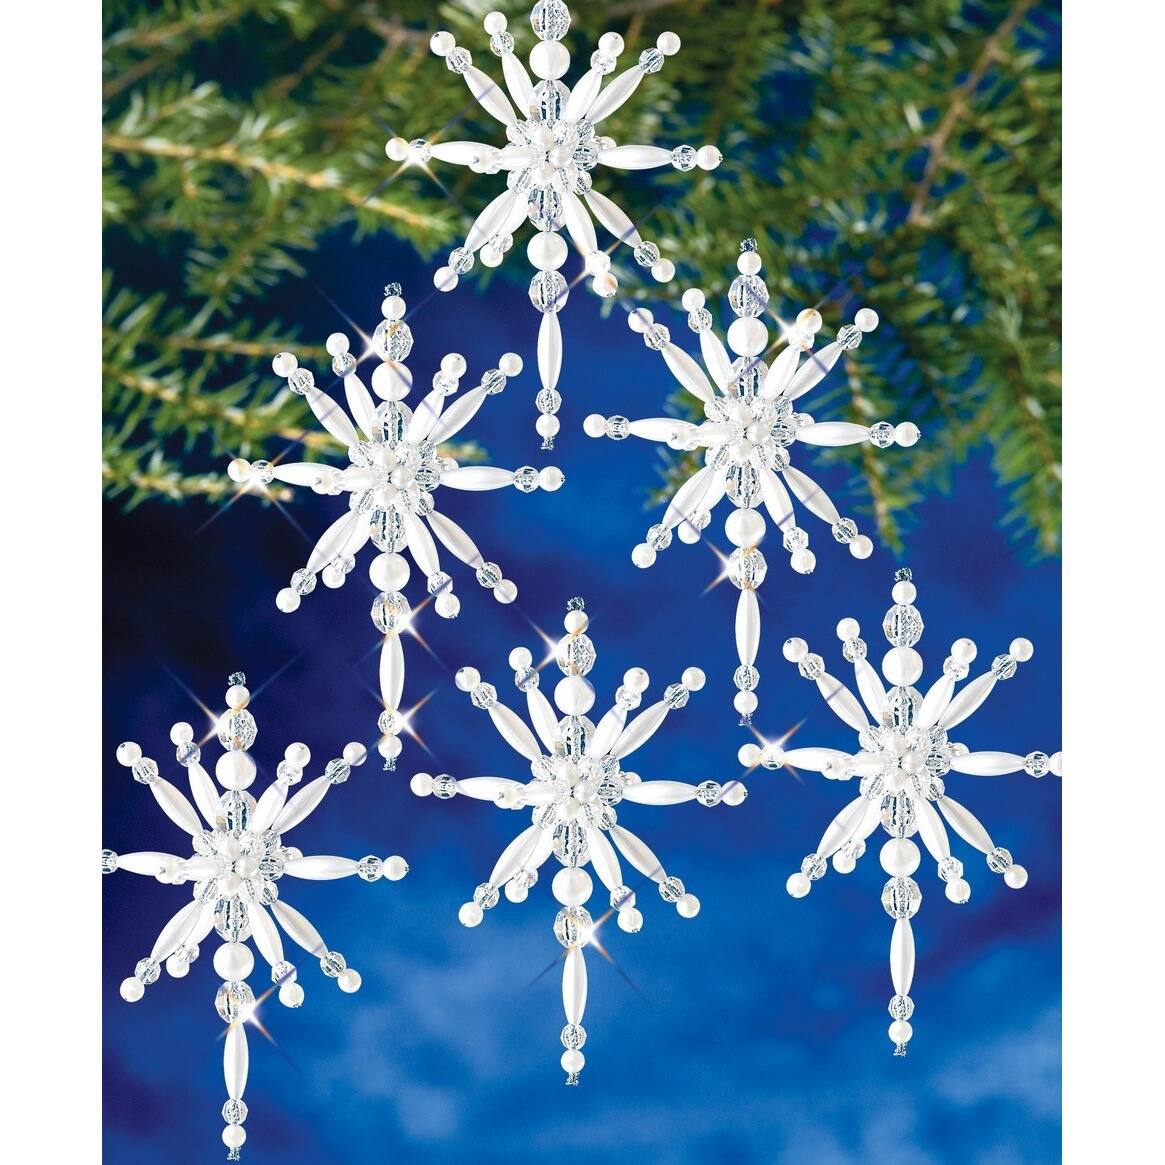 Beadery Plastic Holiday Beaded Ornament Kit North Stars 2.5-inch Makes 8 by Beadery 